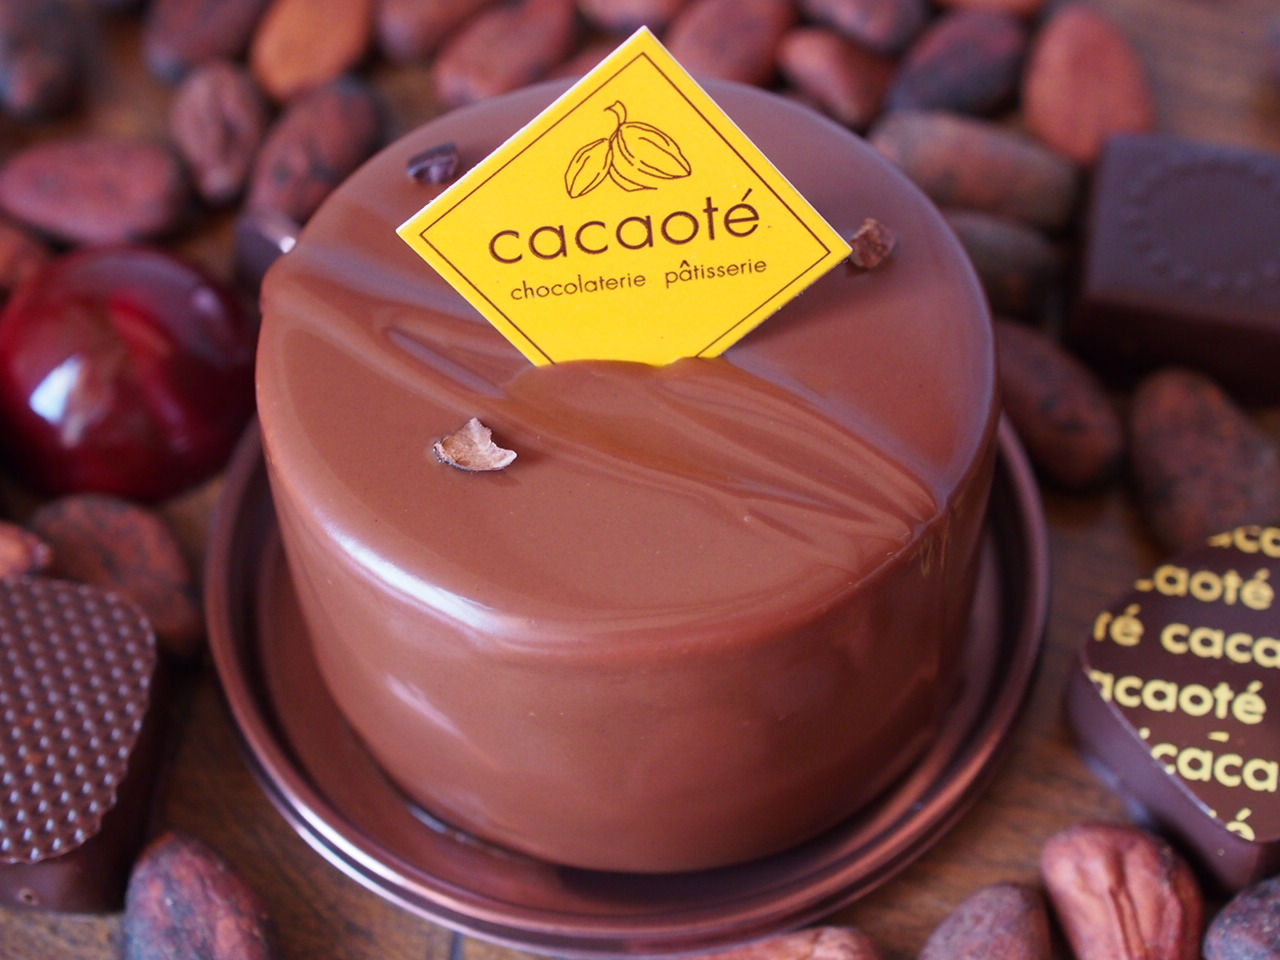 Cacaote Chocolaterie Patisserie 石川県金沢市の小さなショコラトリー パティスリー